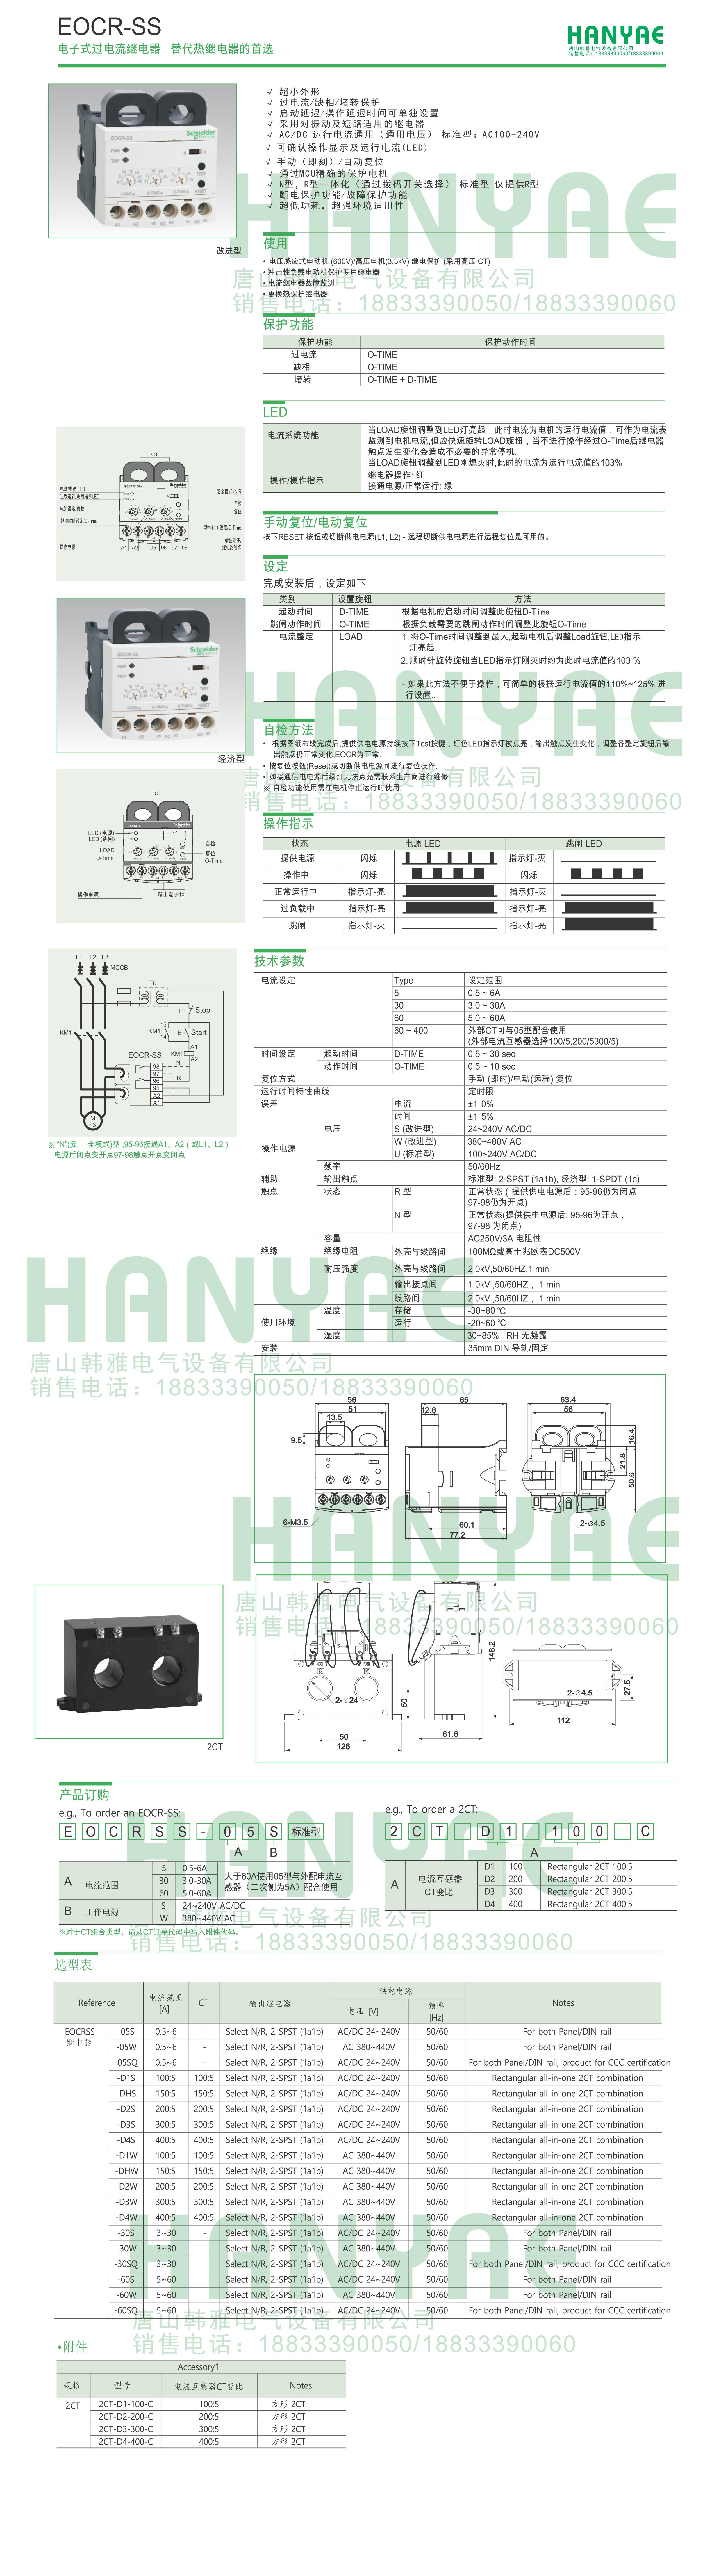 EOCRSS-60NV7原装进口继电器 施耐德,韩国三和,韩国SAMWHA,电子式继电器,EOCR-SS